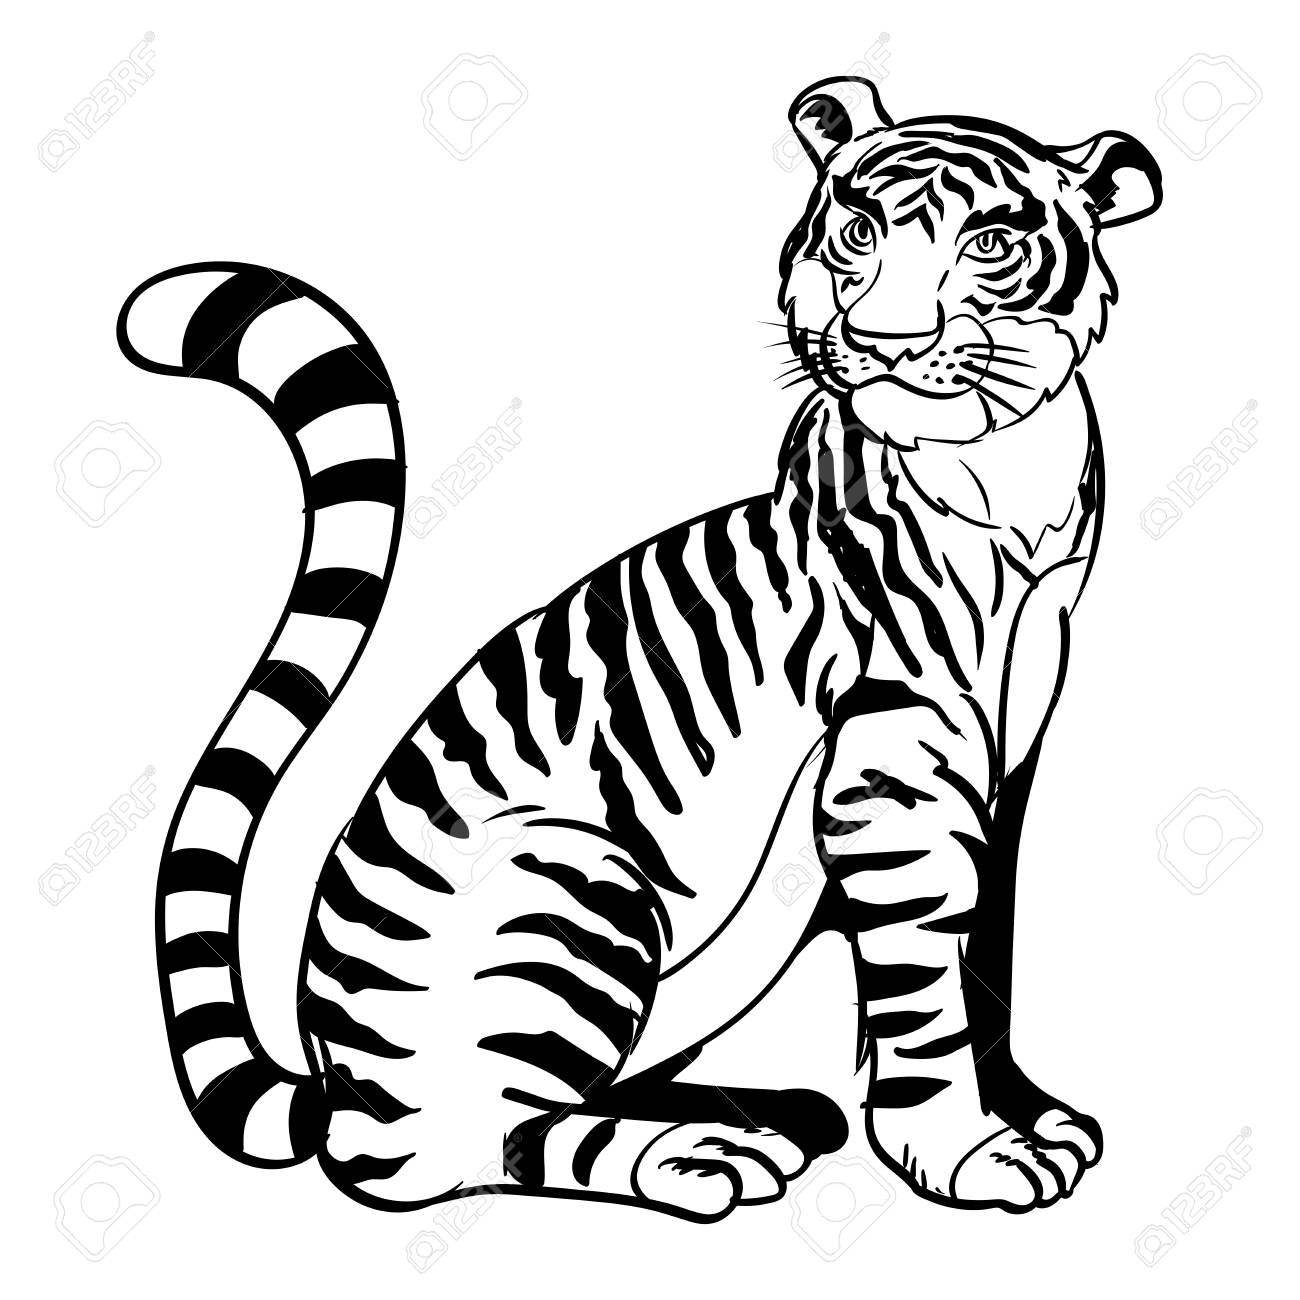 CRMla: Clip Art Of Tiger Black And White